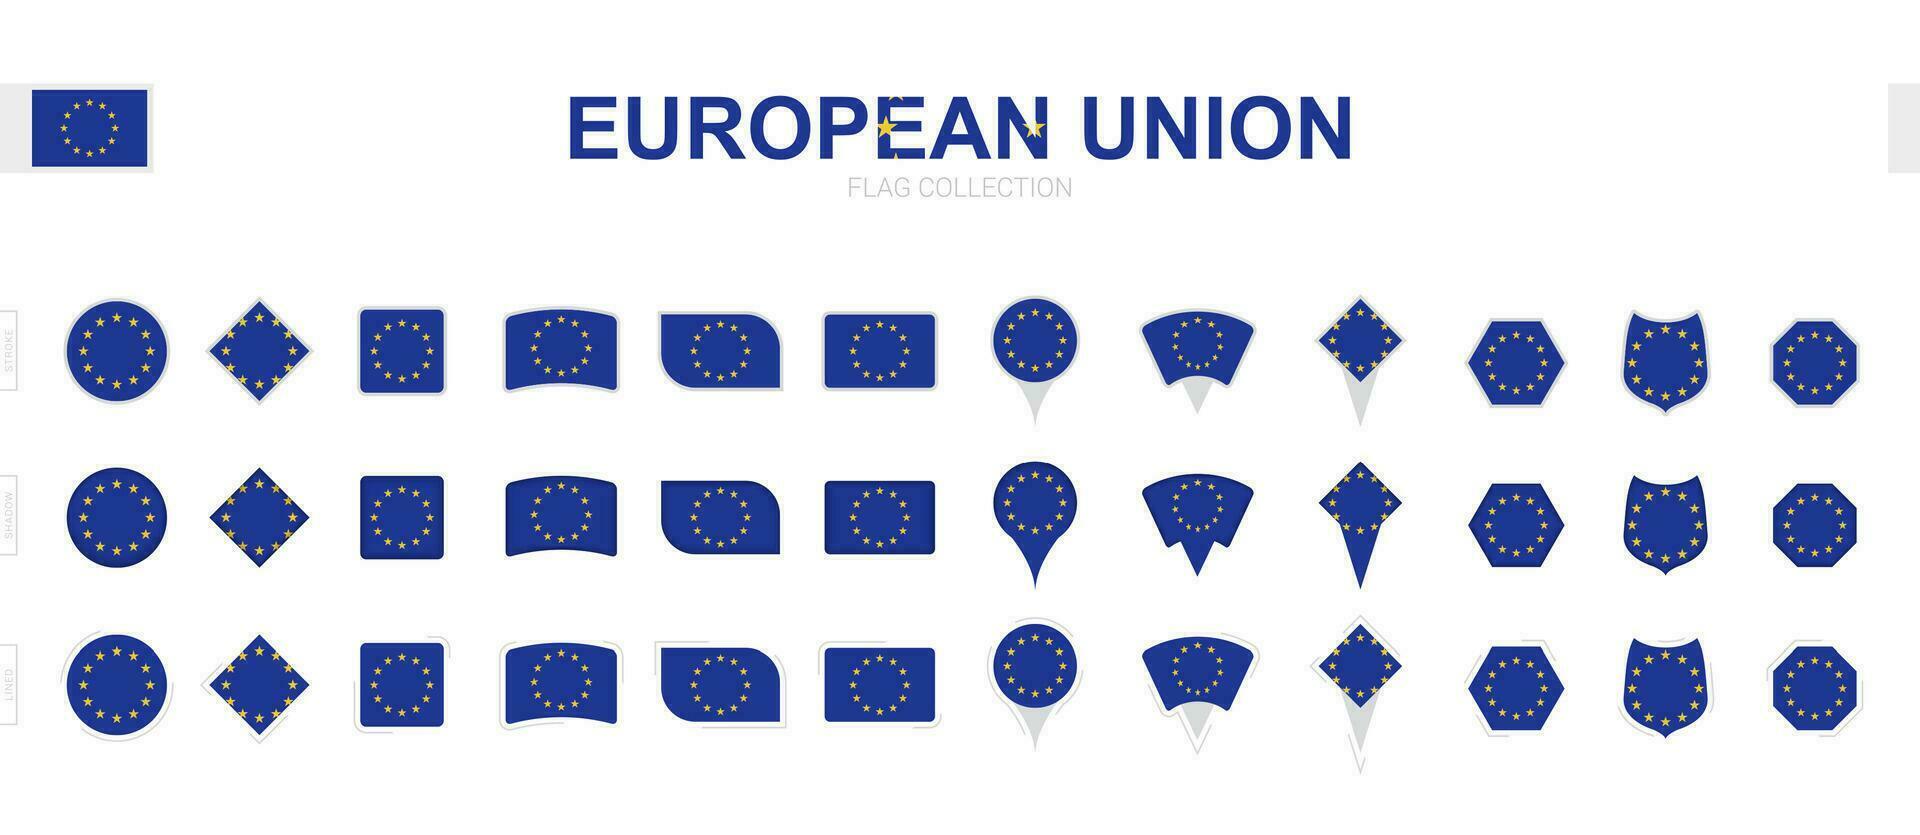 stor samling av europeisk union flaggor av olika former och effekter. vektor